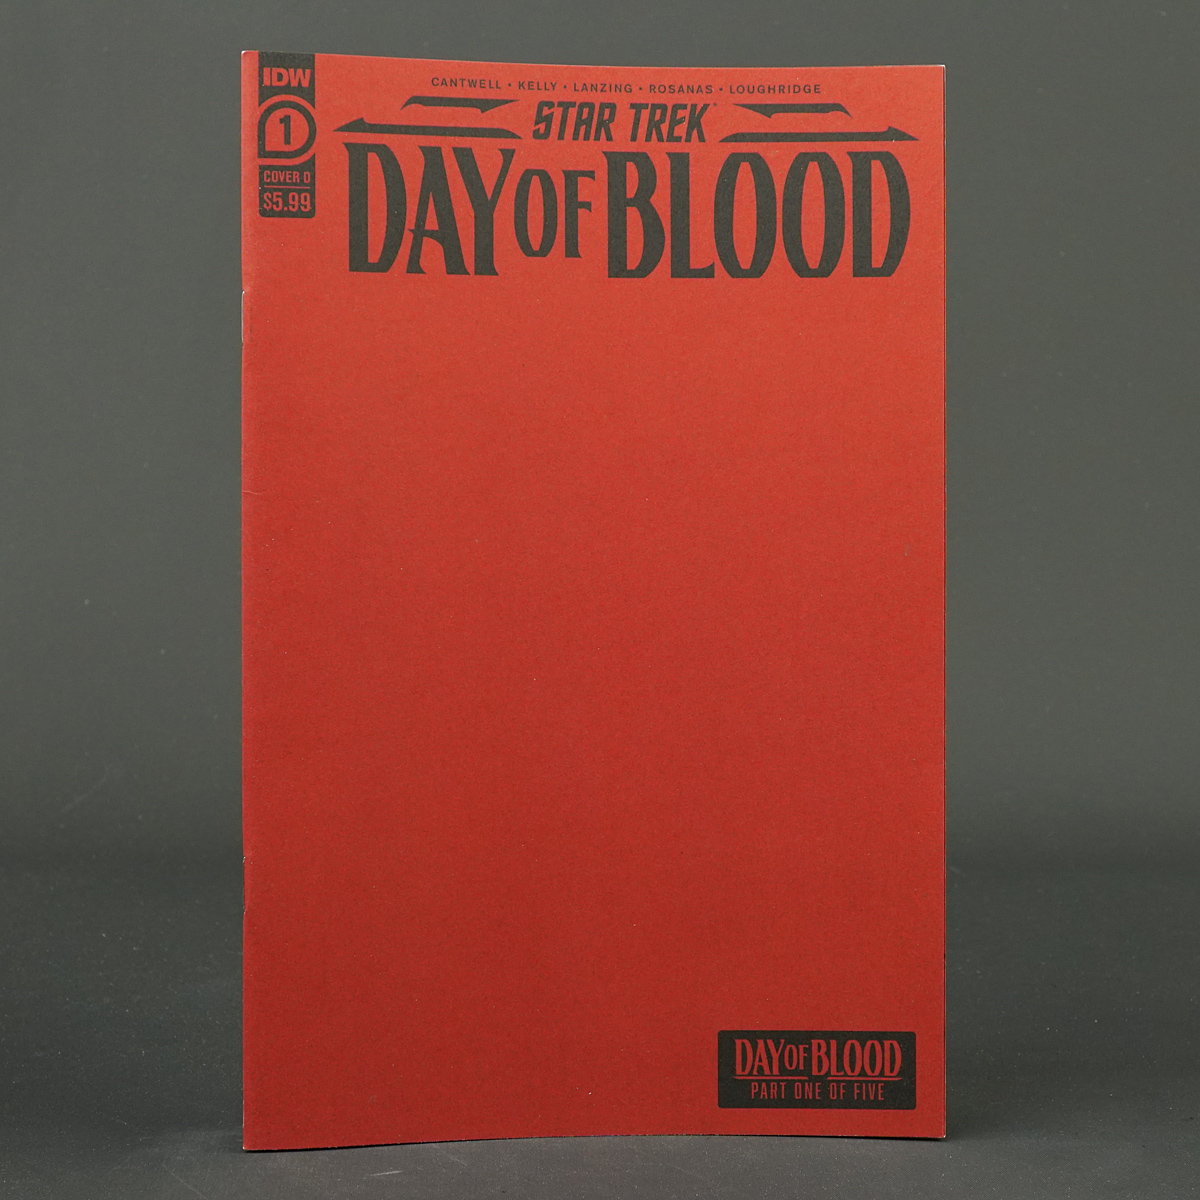 Star Trek DAY OF BLOOD #1 Cvr D IDW Comics MAY231381 1D (CA) Red Sketch Cover